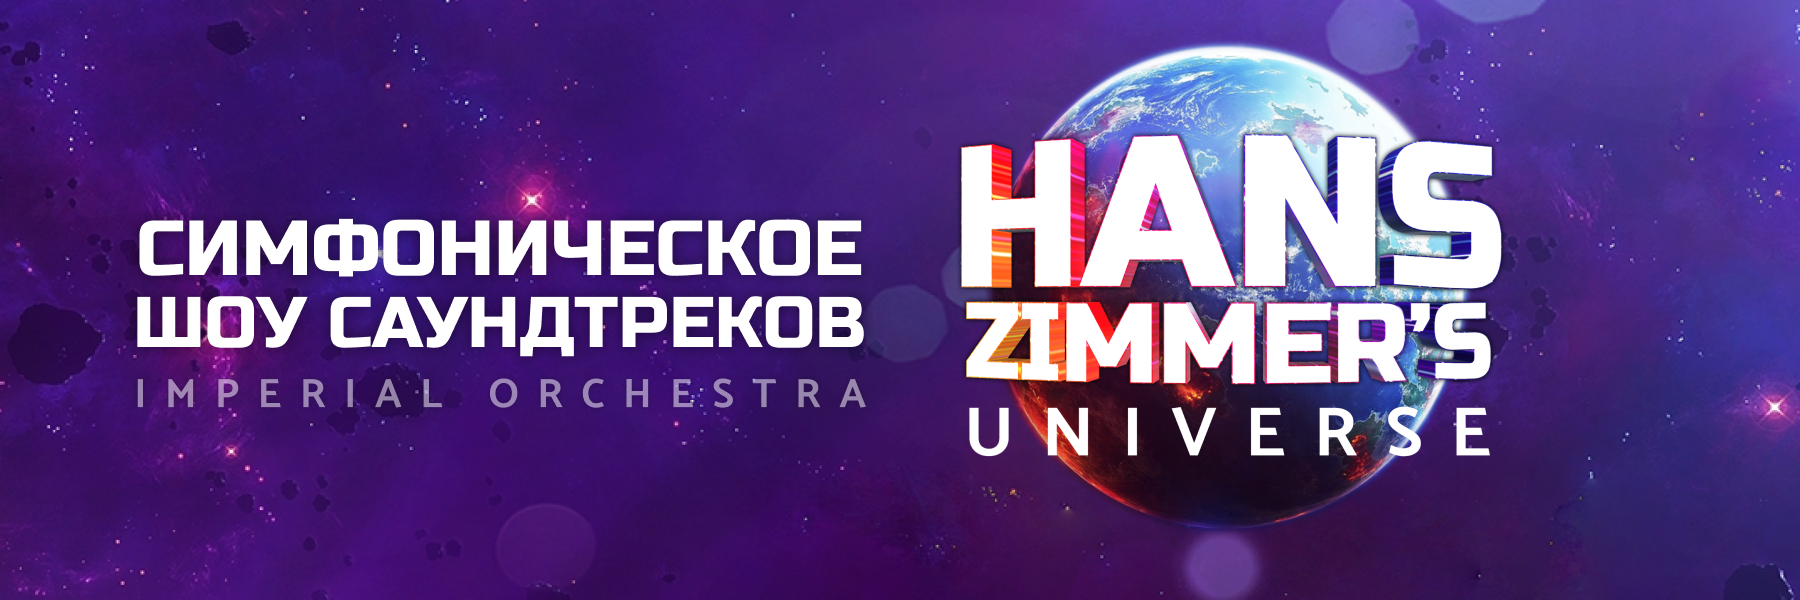 Cinema Medley: Hans Zimmer’s Universe